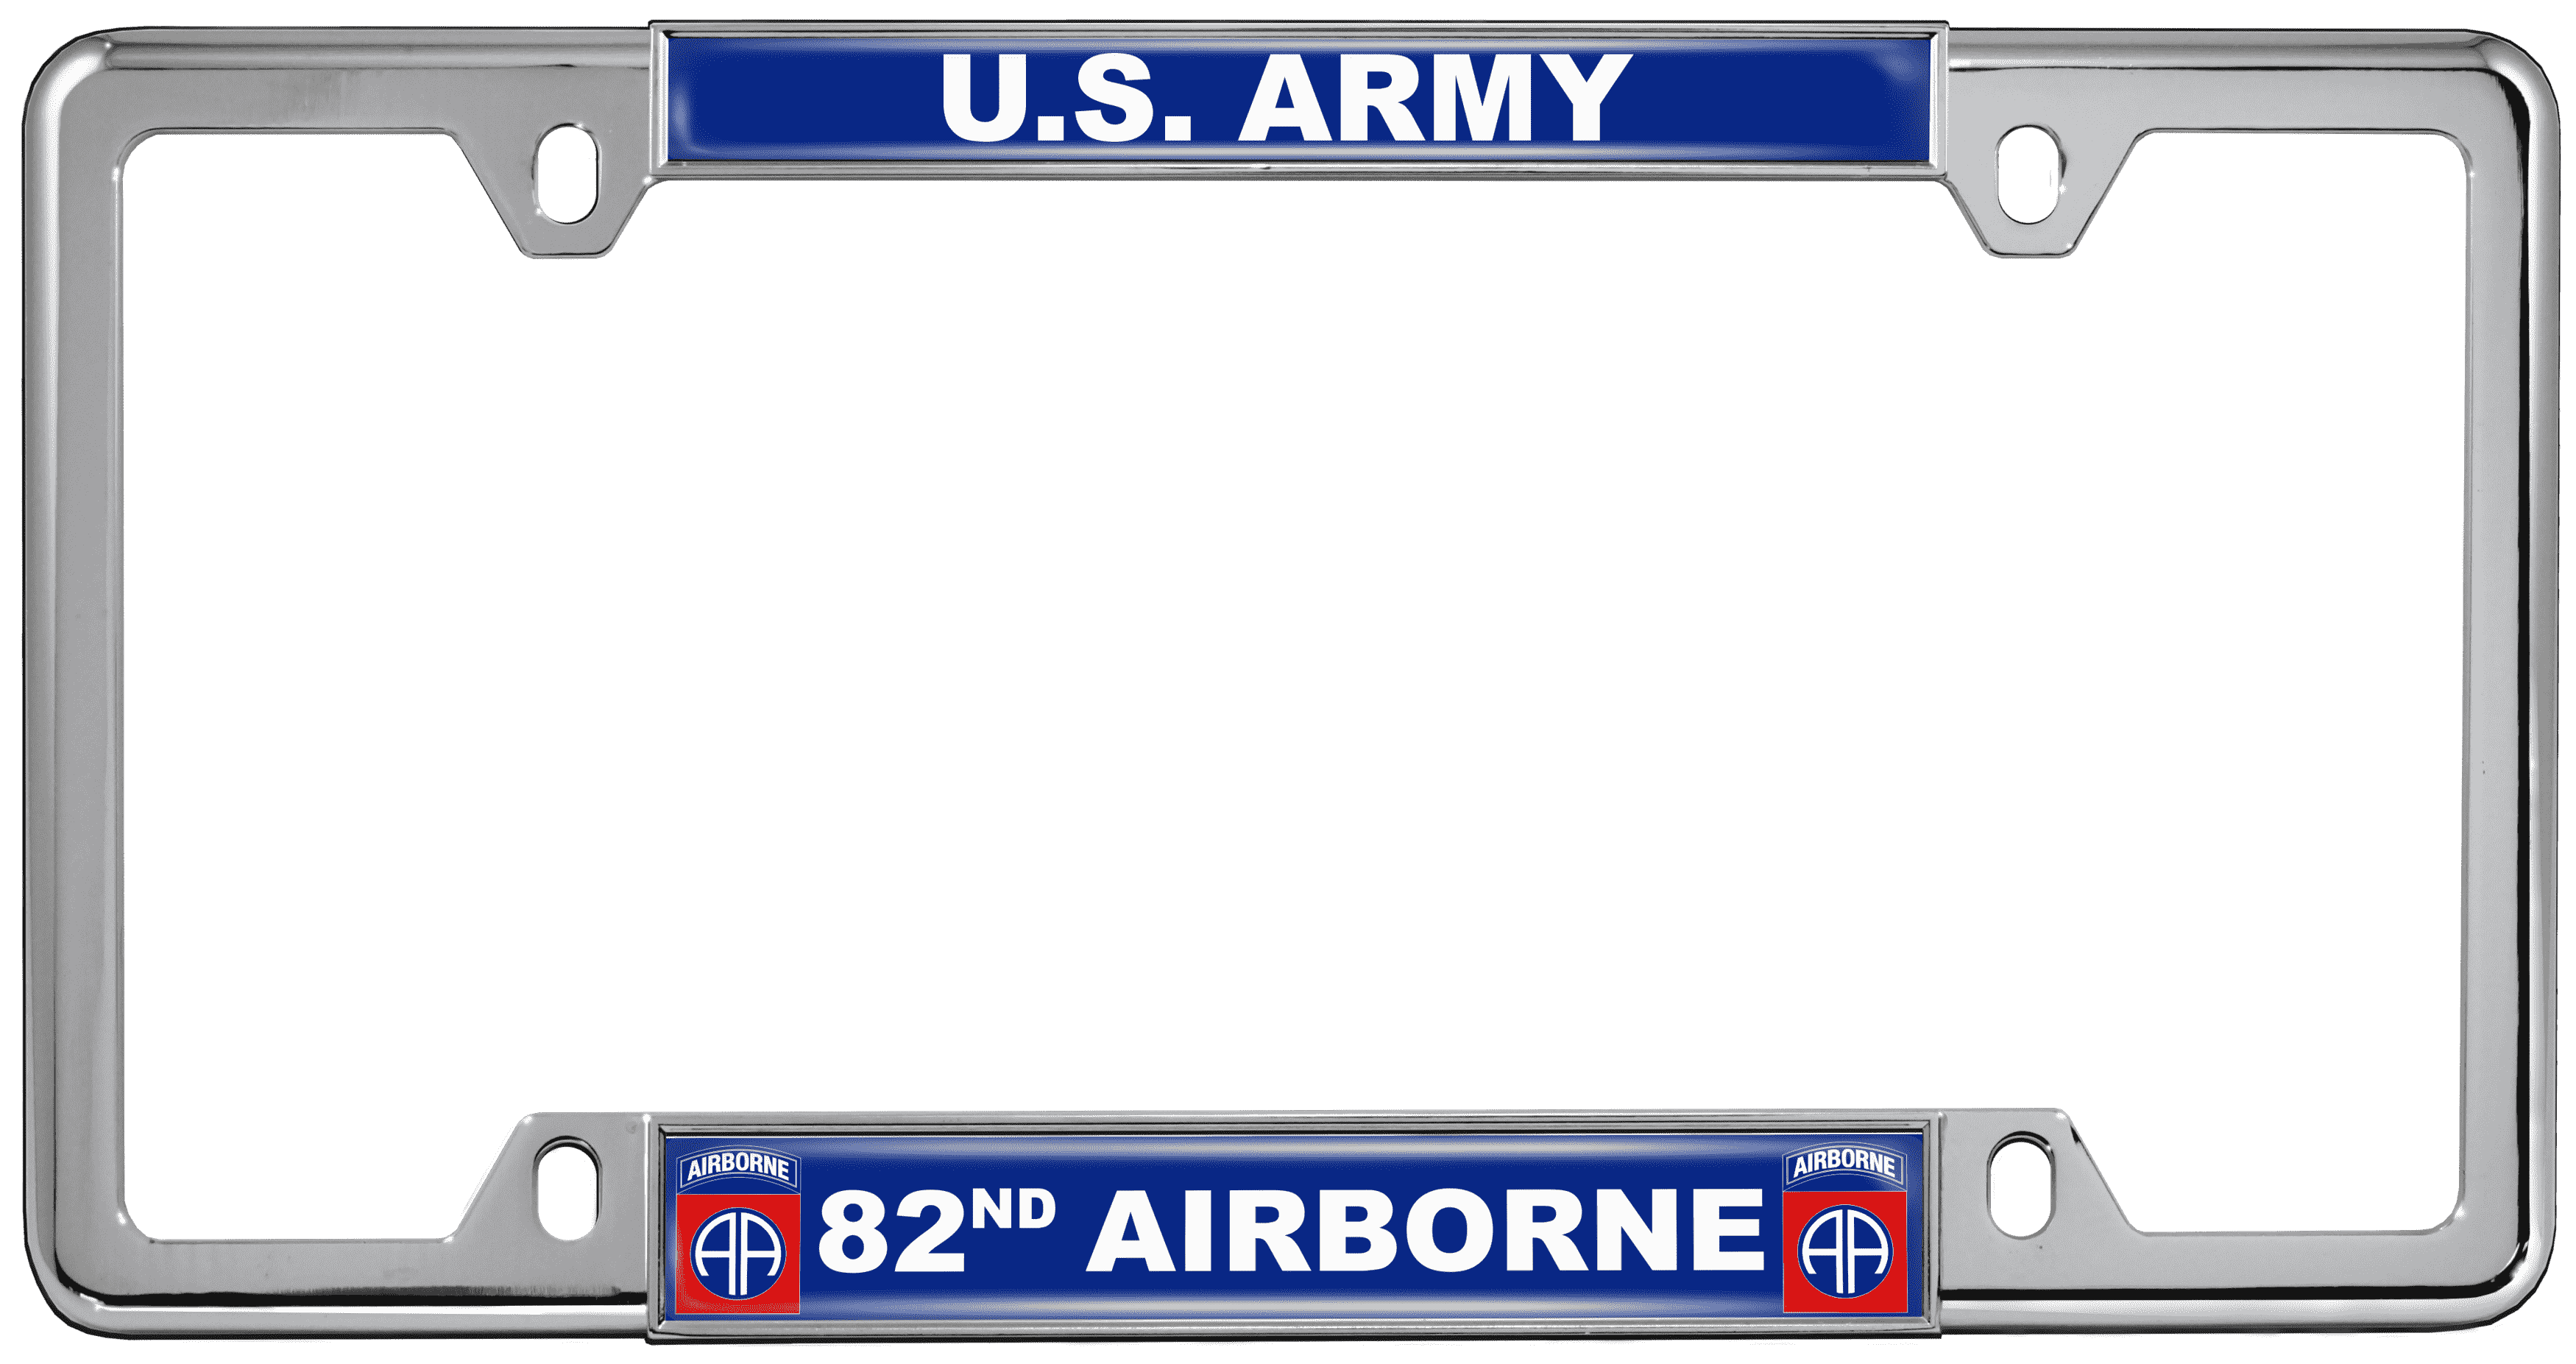 U.S. Army 82nd Airborne - Car Metal License Plate Frame